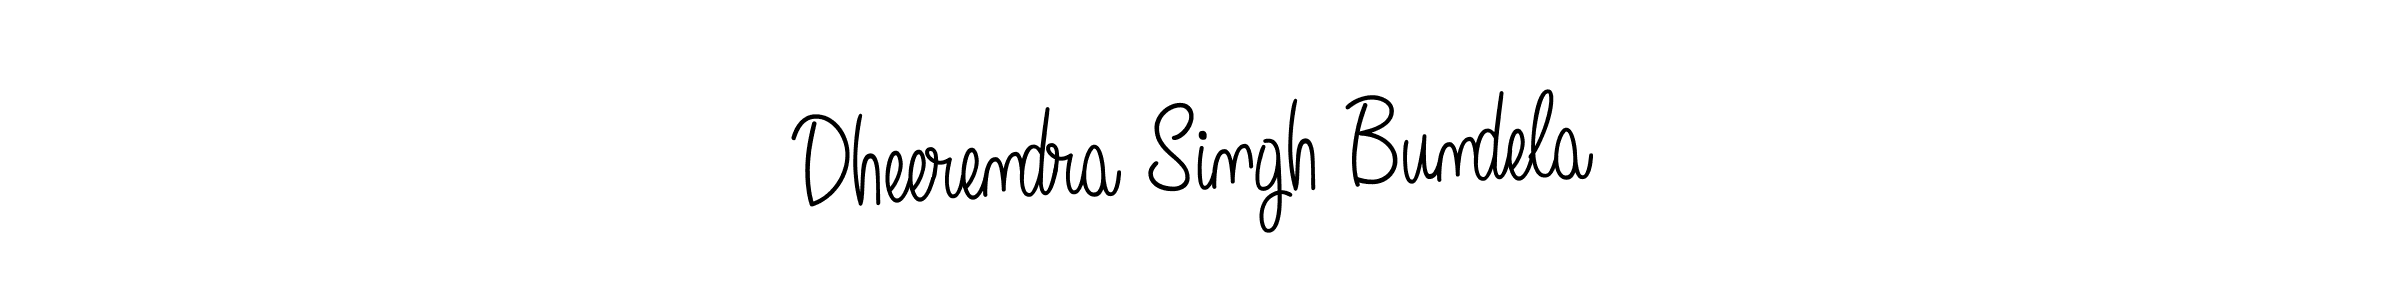 Best and Professional Signature Style for Dheerendra Singh Bundela. Angelique-Rose-font-FFP Best Signature Style Collection. Dheerendra Singh Bundela signature style 5 images and pictures png